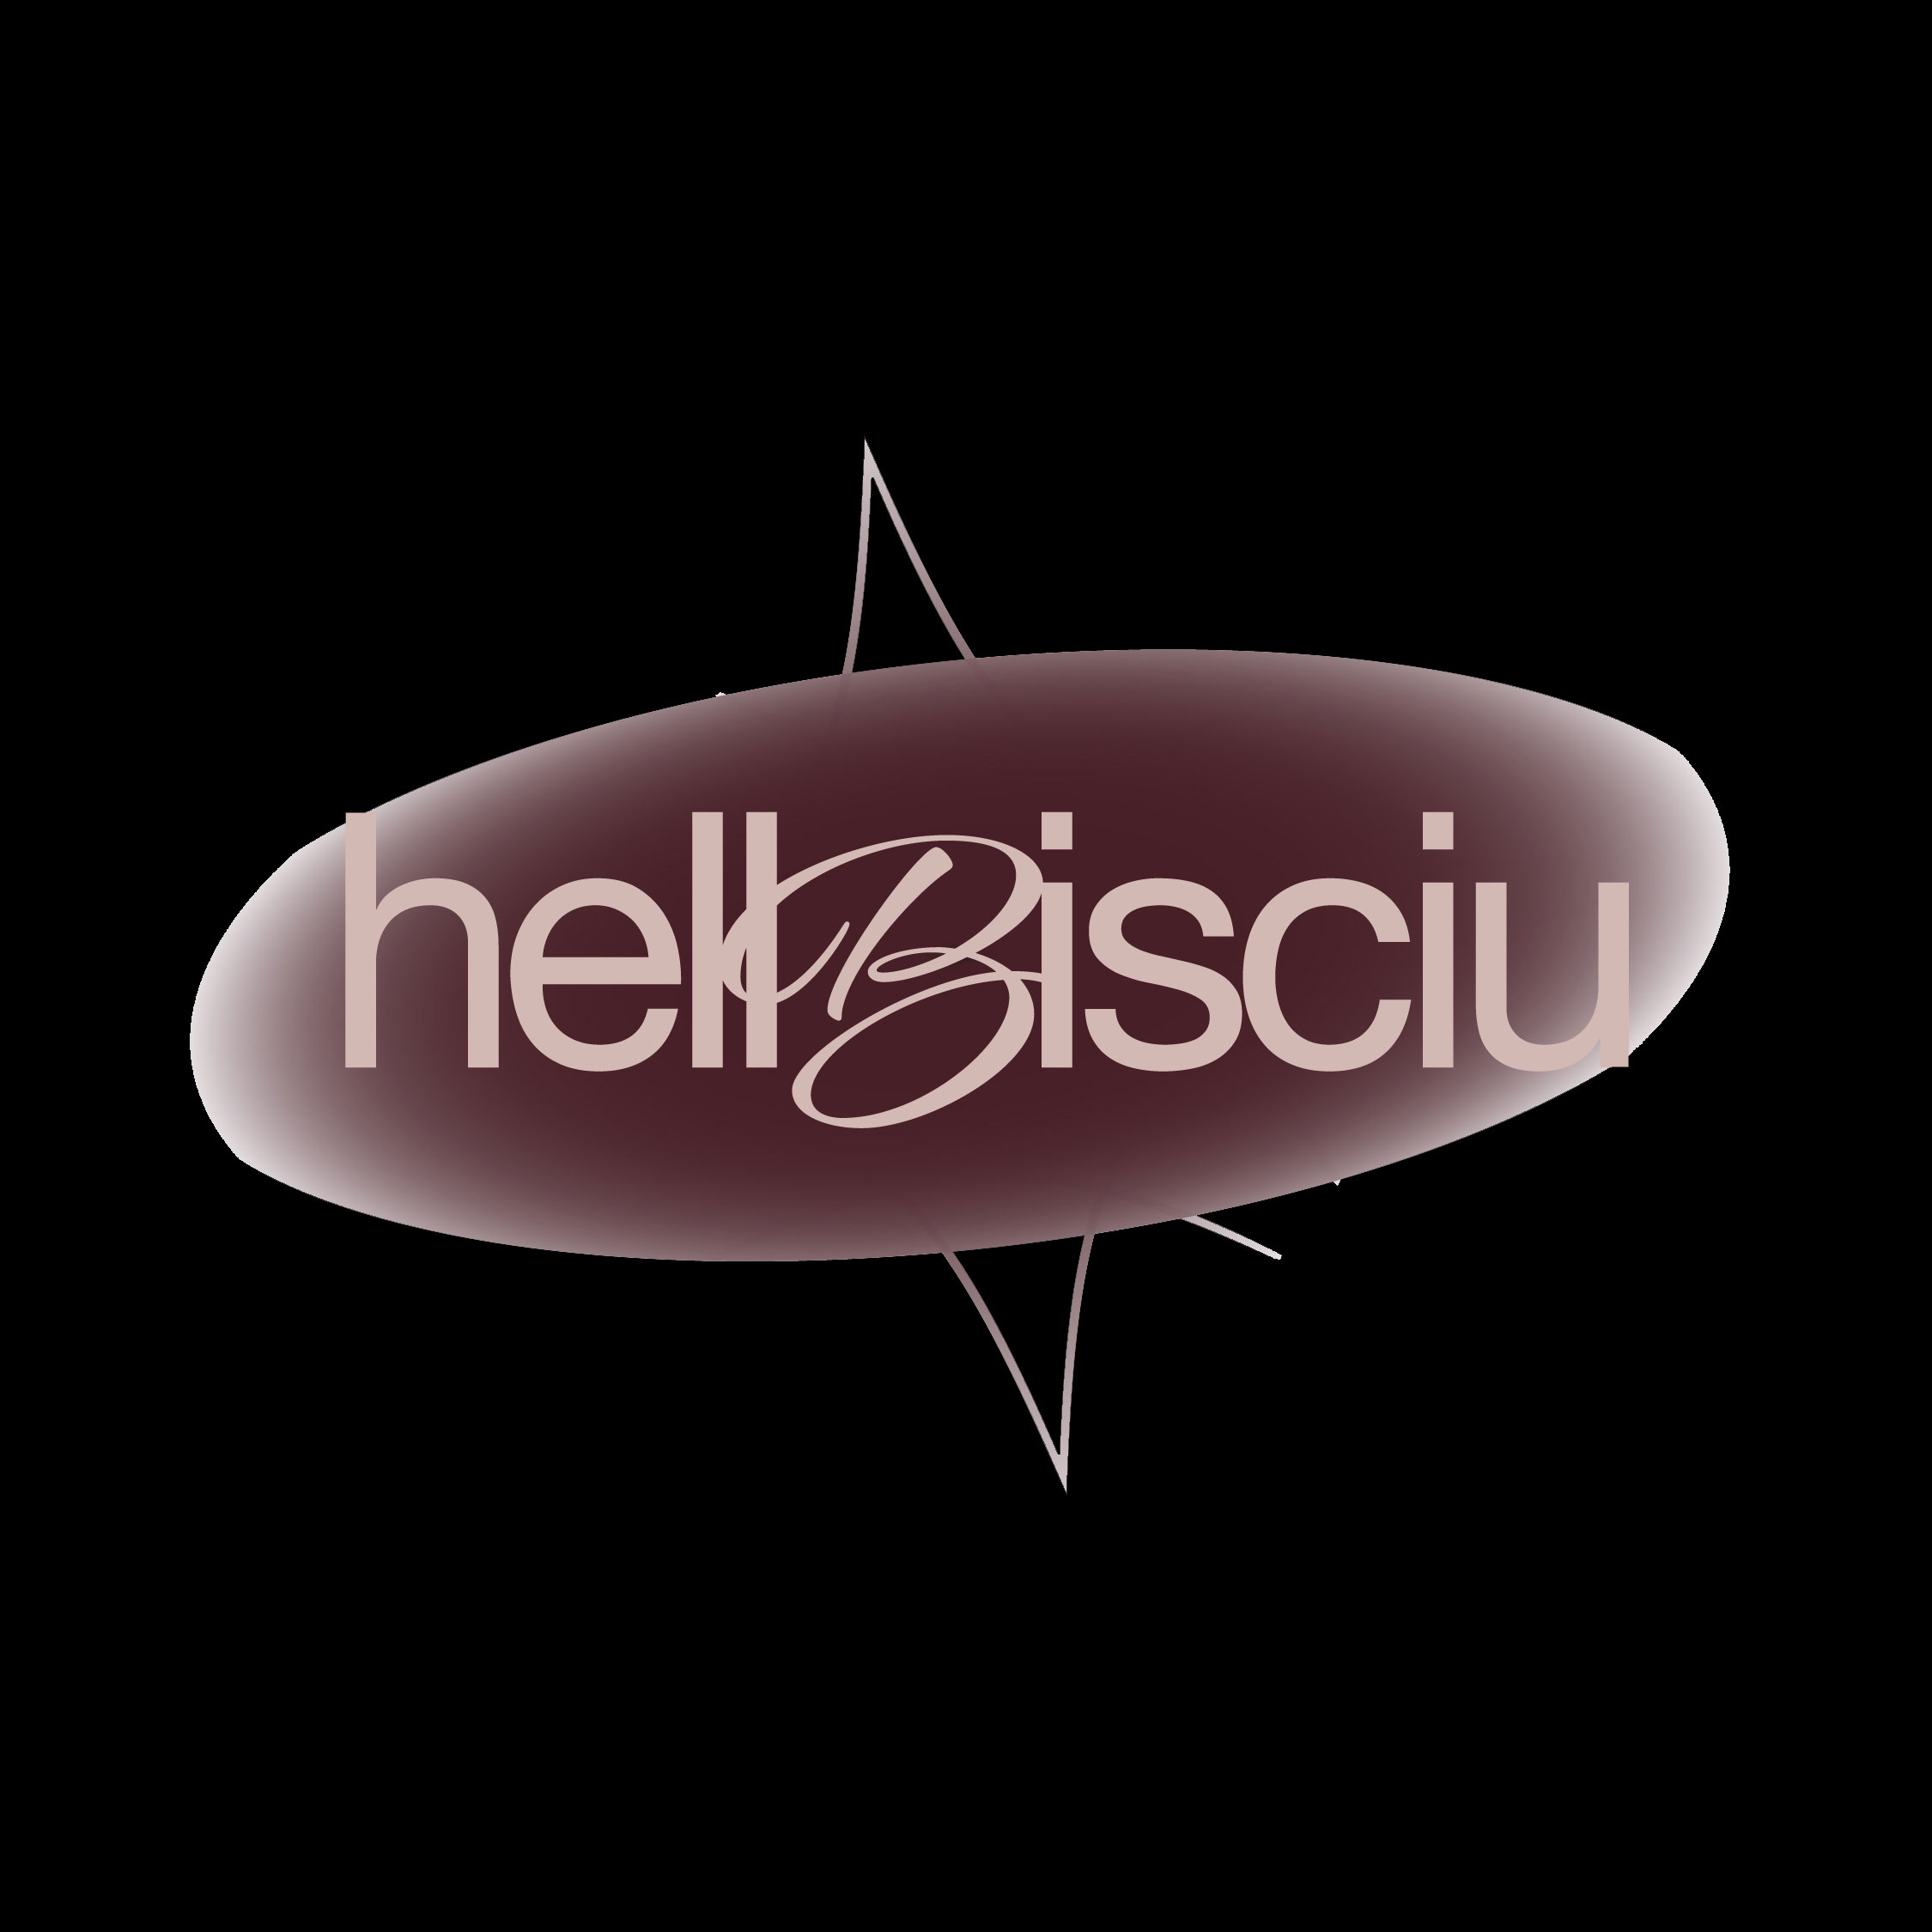 hellBisciu_logo_black